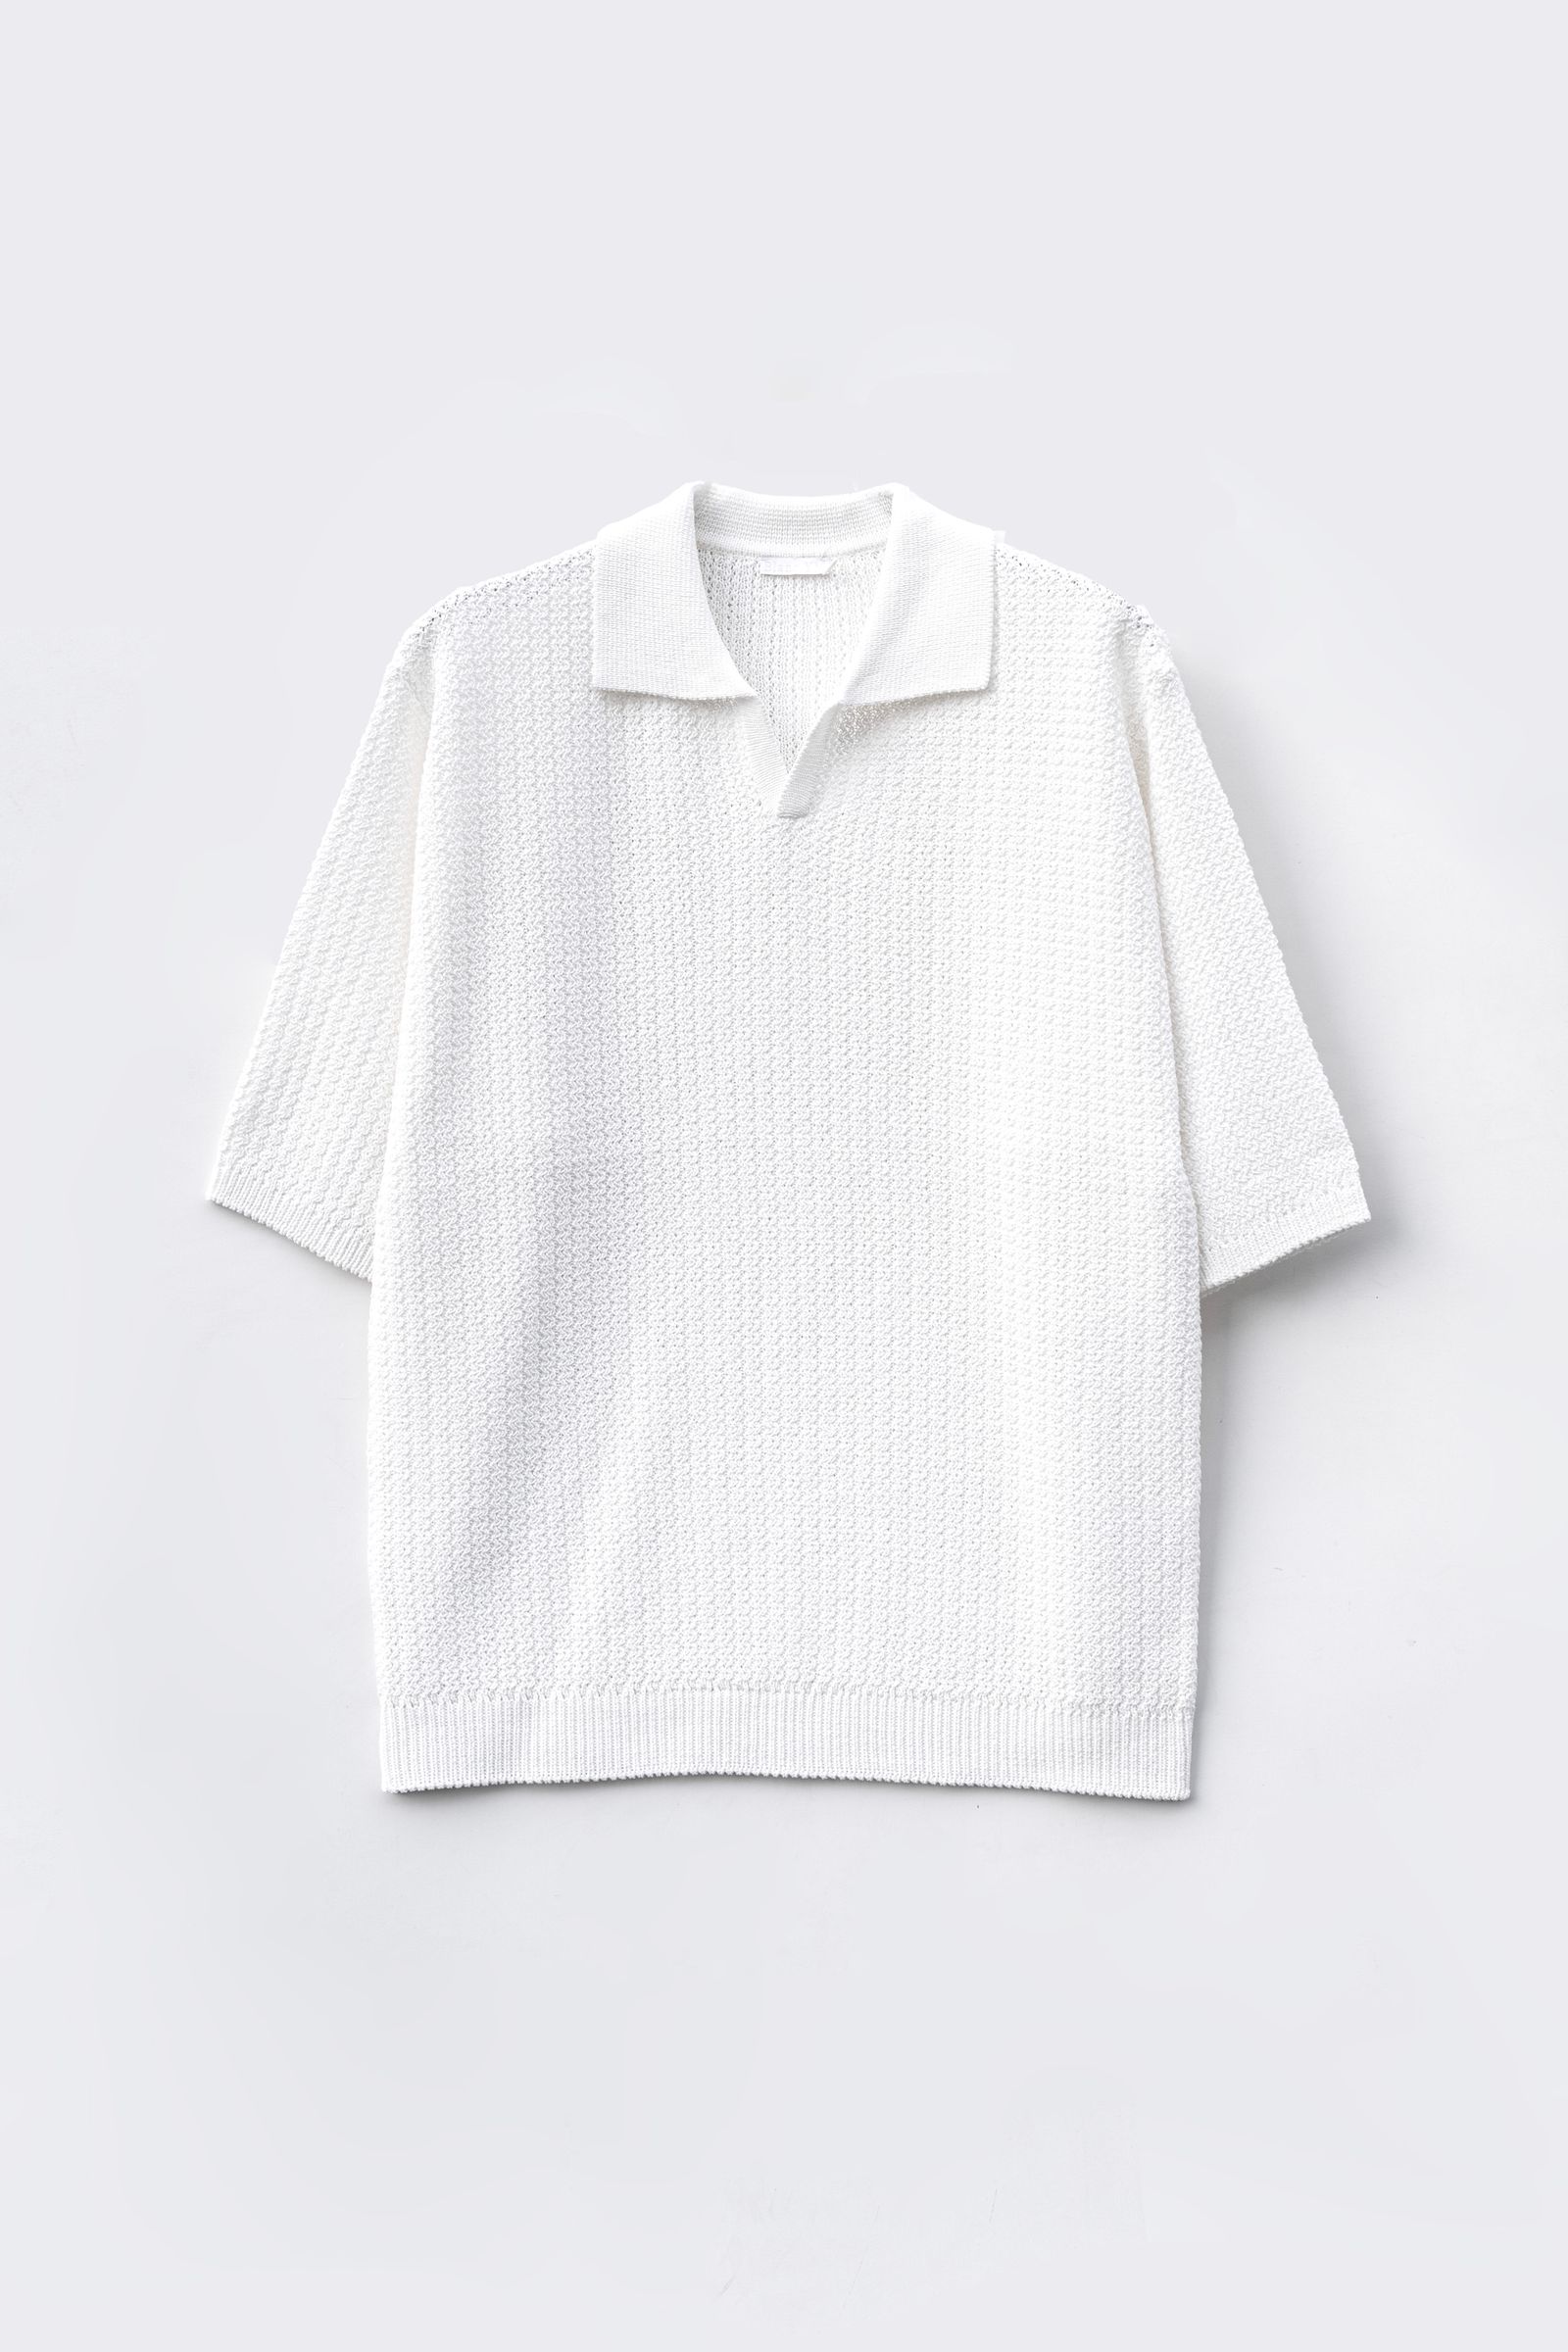 Blanc YM - Skipper knit Shirt / White | Retikle Online Store